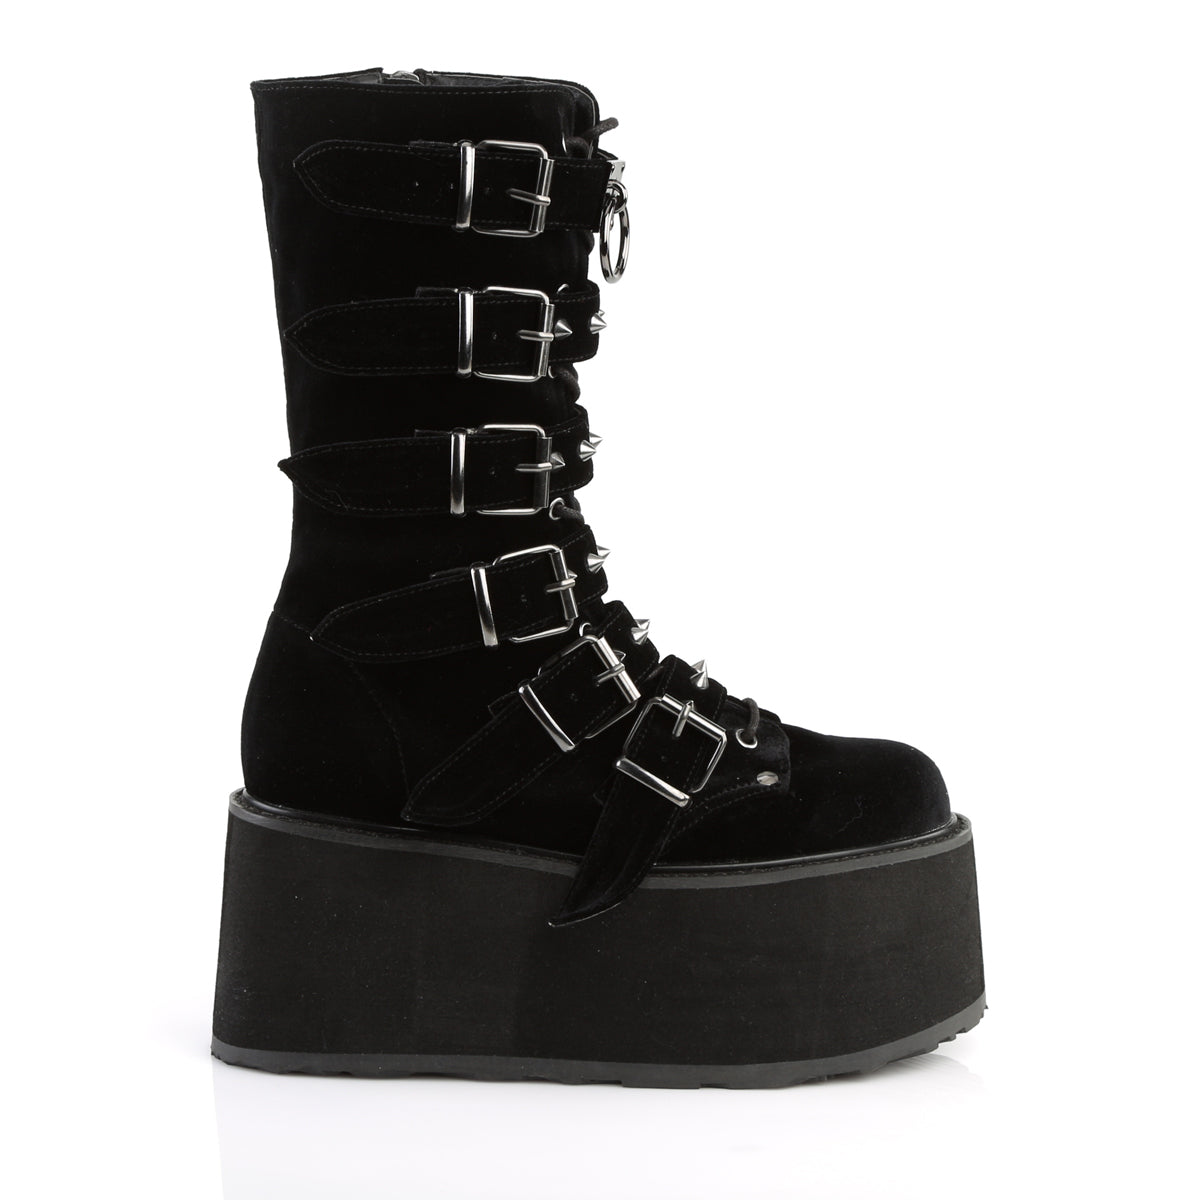 DAMNED-225 Demonia Black Velvet Women's Mid-Calf & Knee High Boots [Demonia Cult Alternative Footwear]